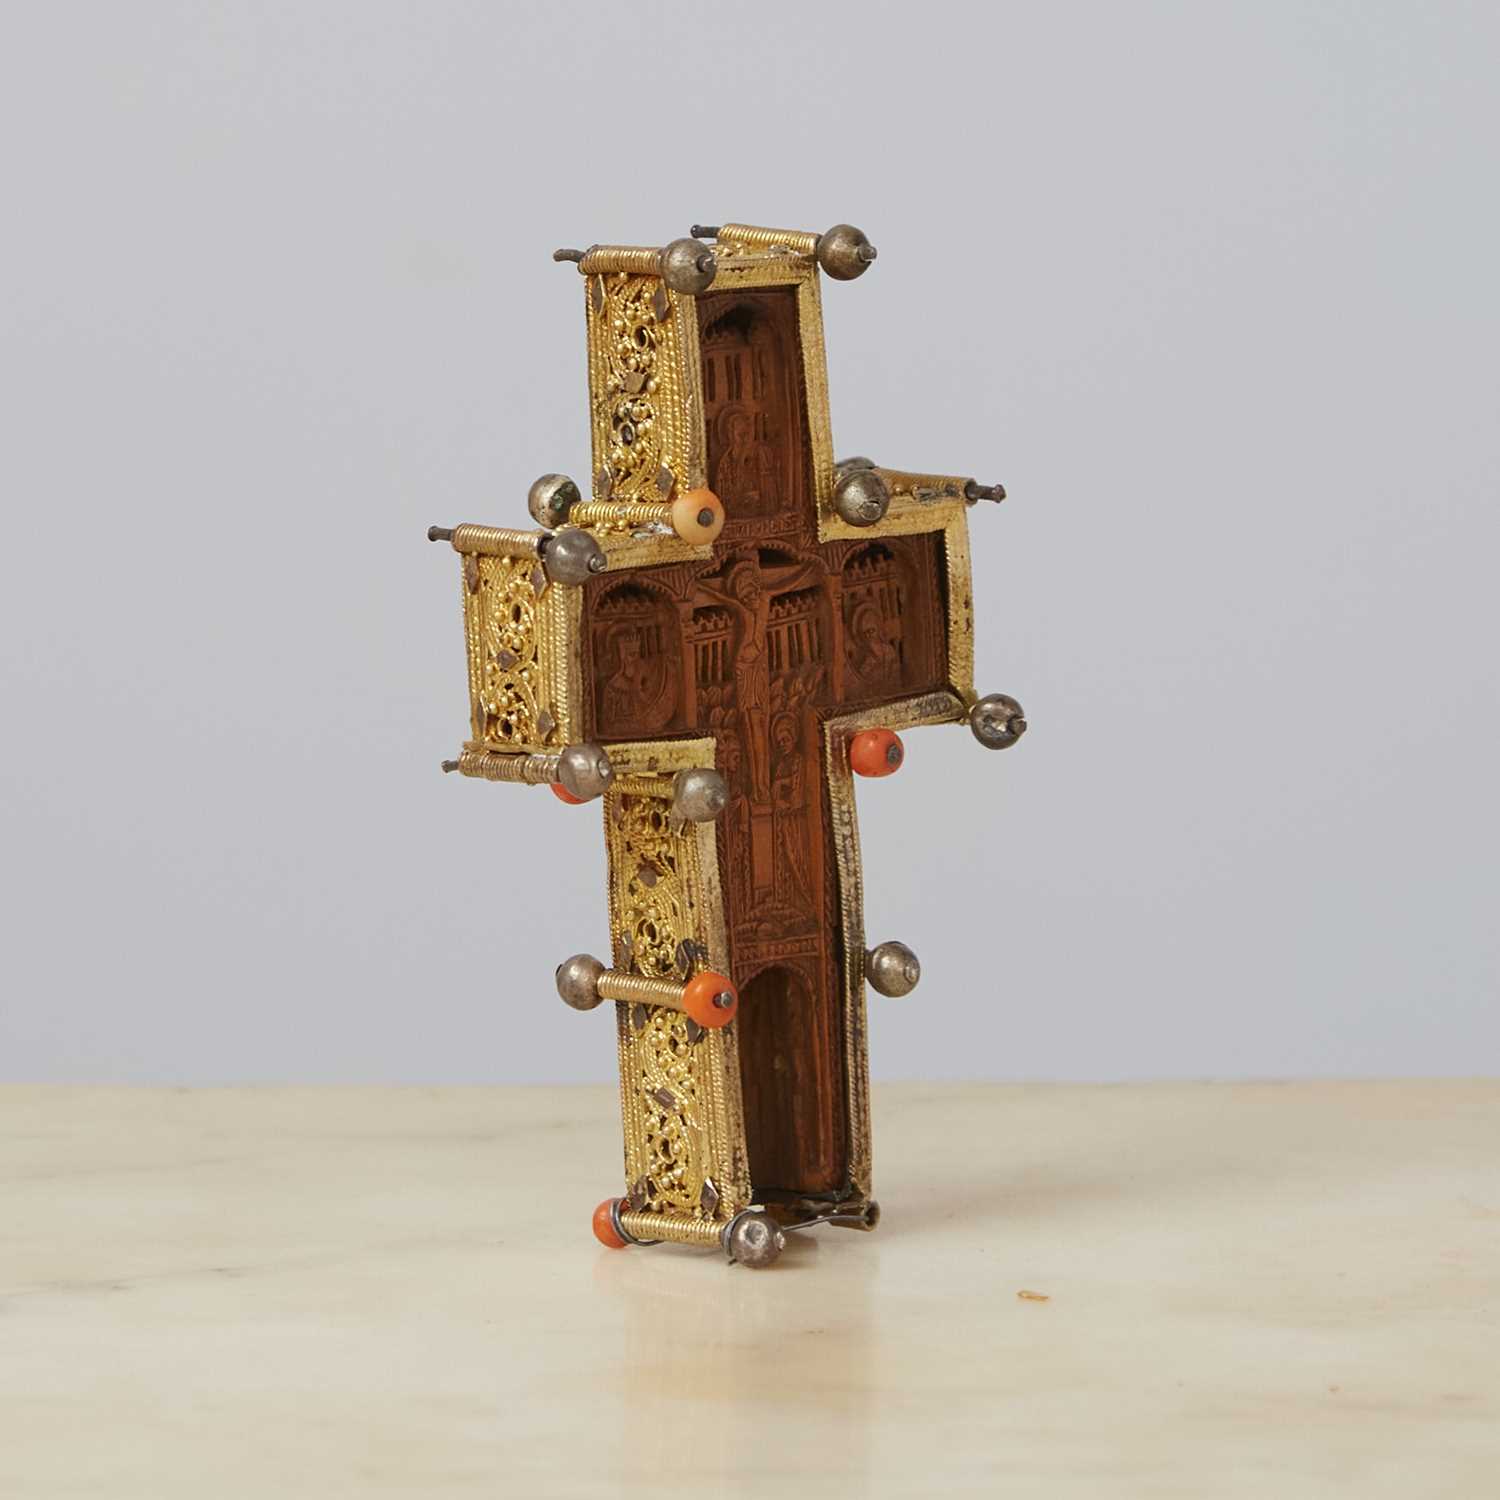 Lot 67 - Greek Orthodox Gilt-Bronze and Carved Wood Cross